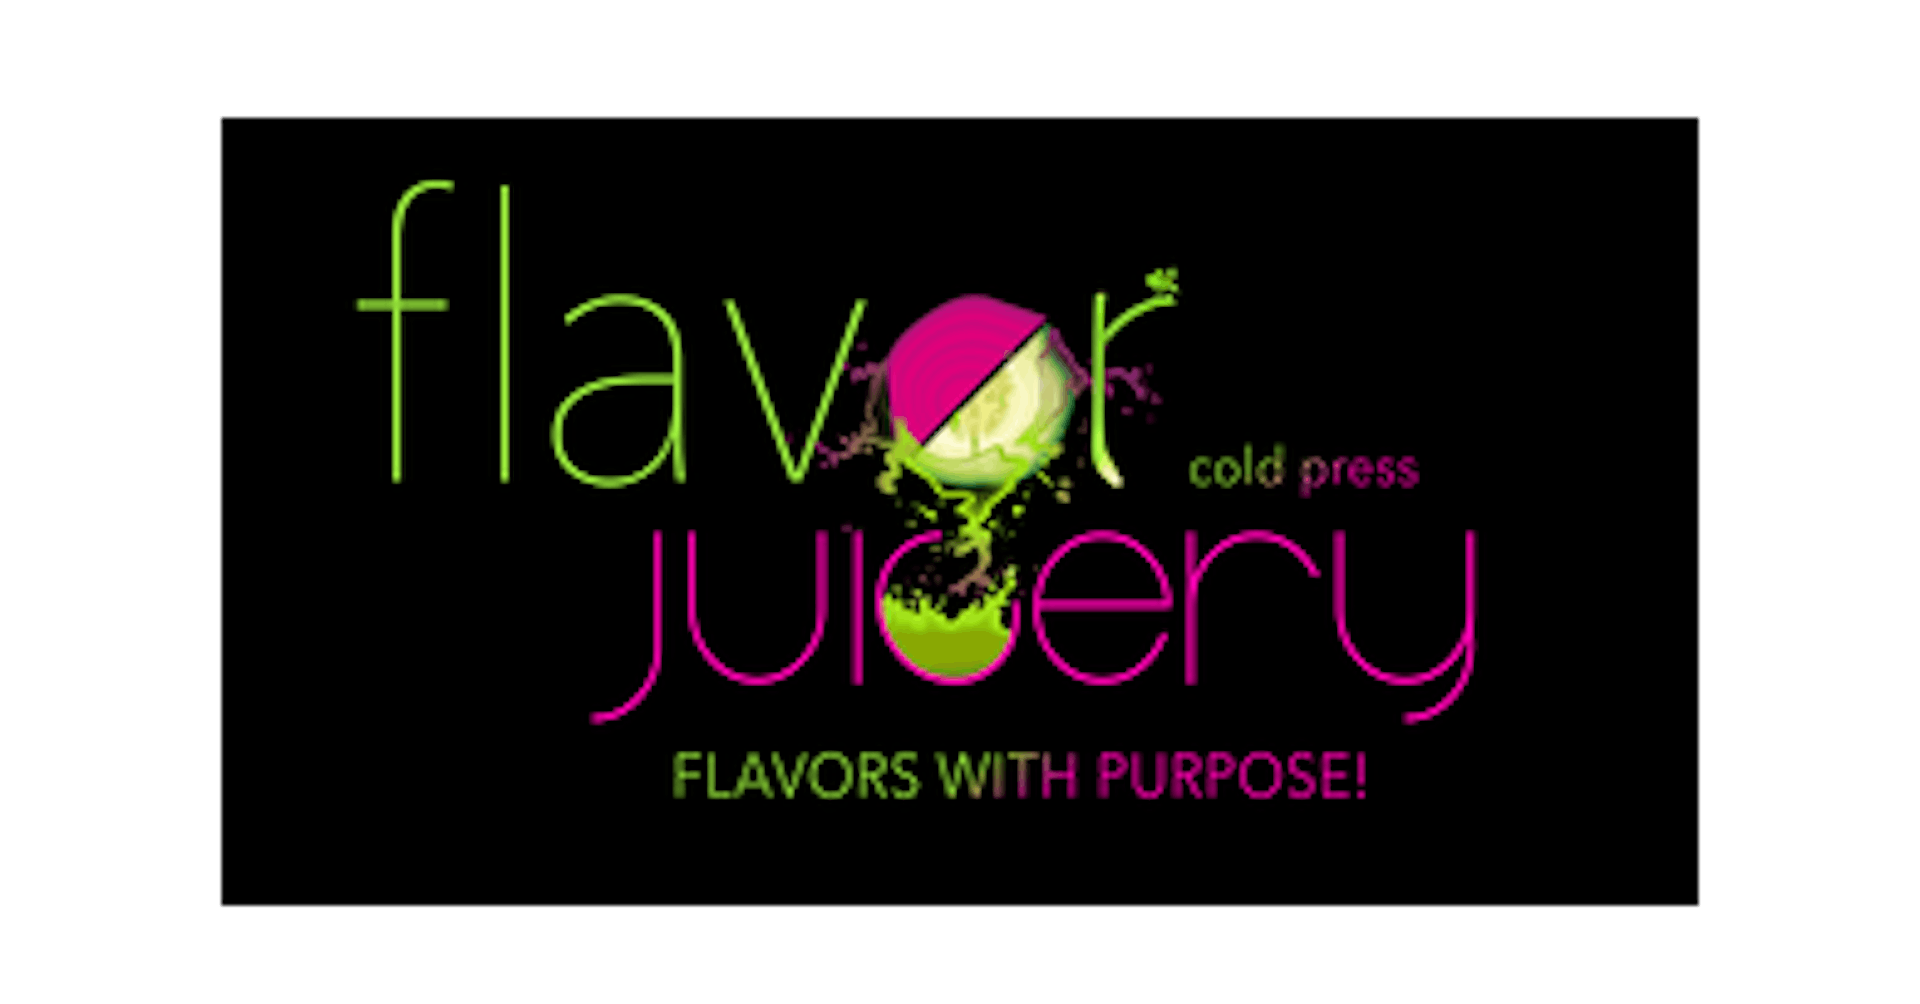 www.flavorjuiceryga.com